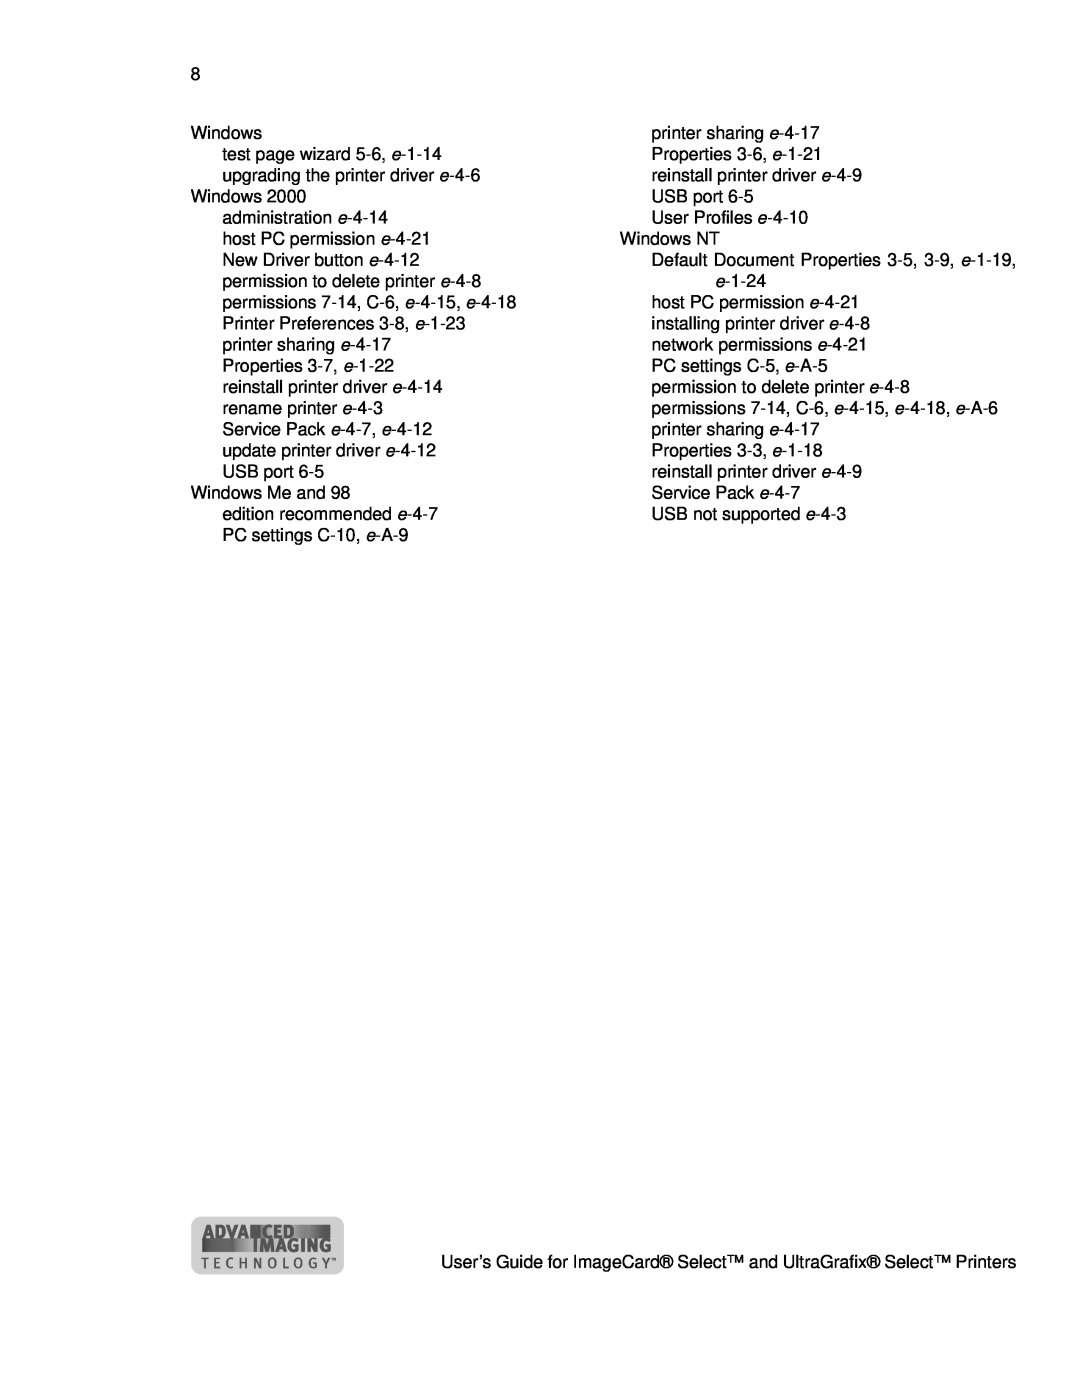 Datacard Group ImageCard SelectTM and UltraGrafix SelectTM Printers manual User Profiles e-4-10 Windows NT 